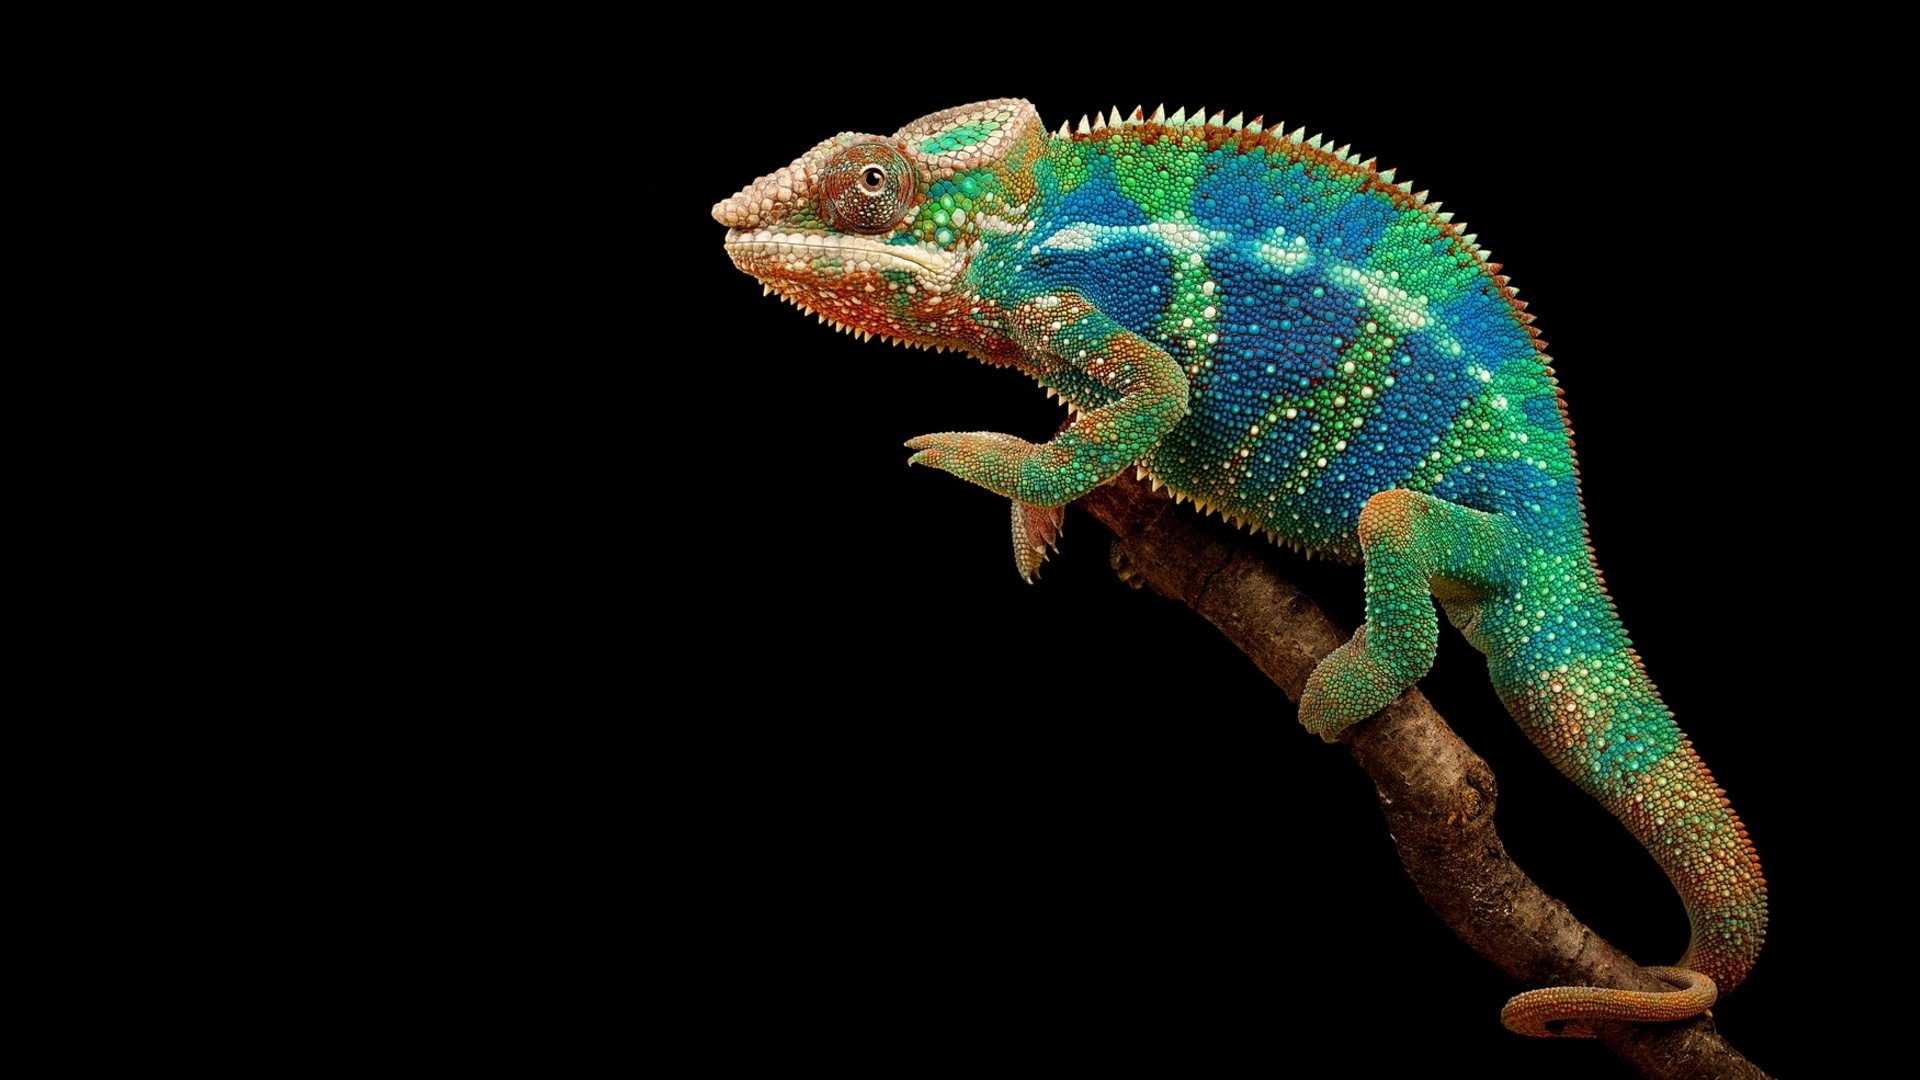 750 Chameleon Pictures HD  Download Free Images on Unsplash